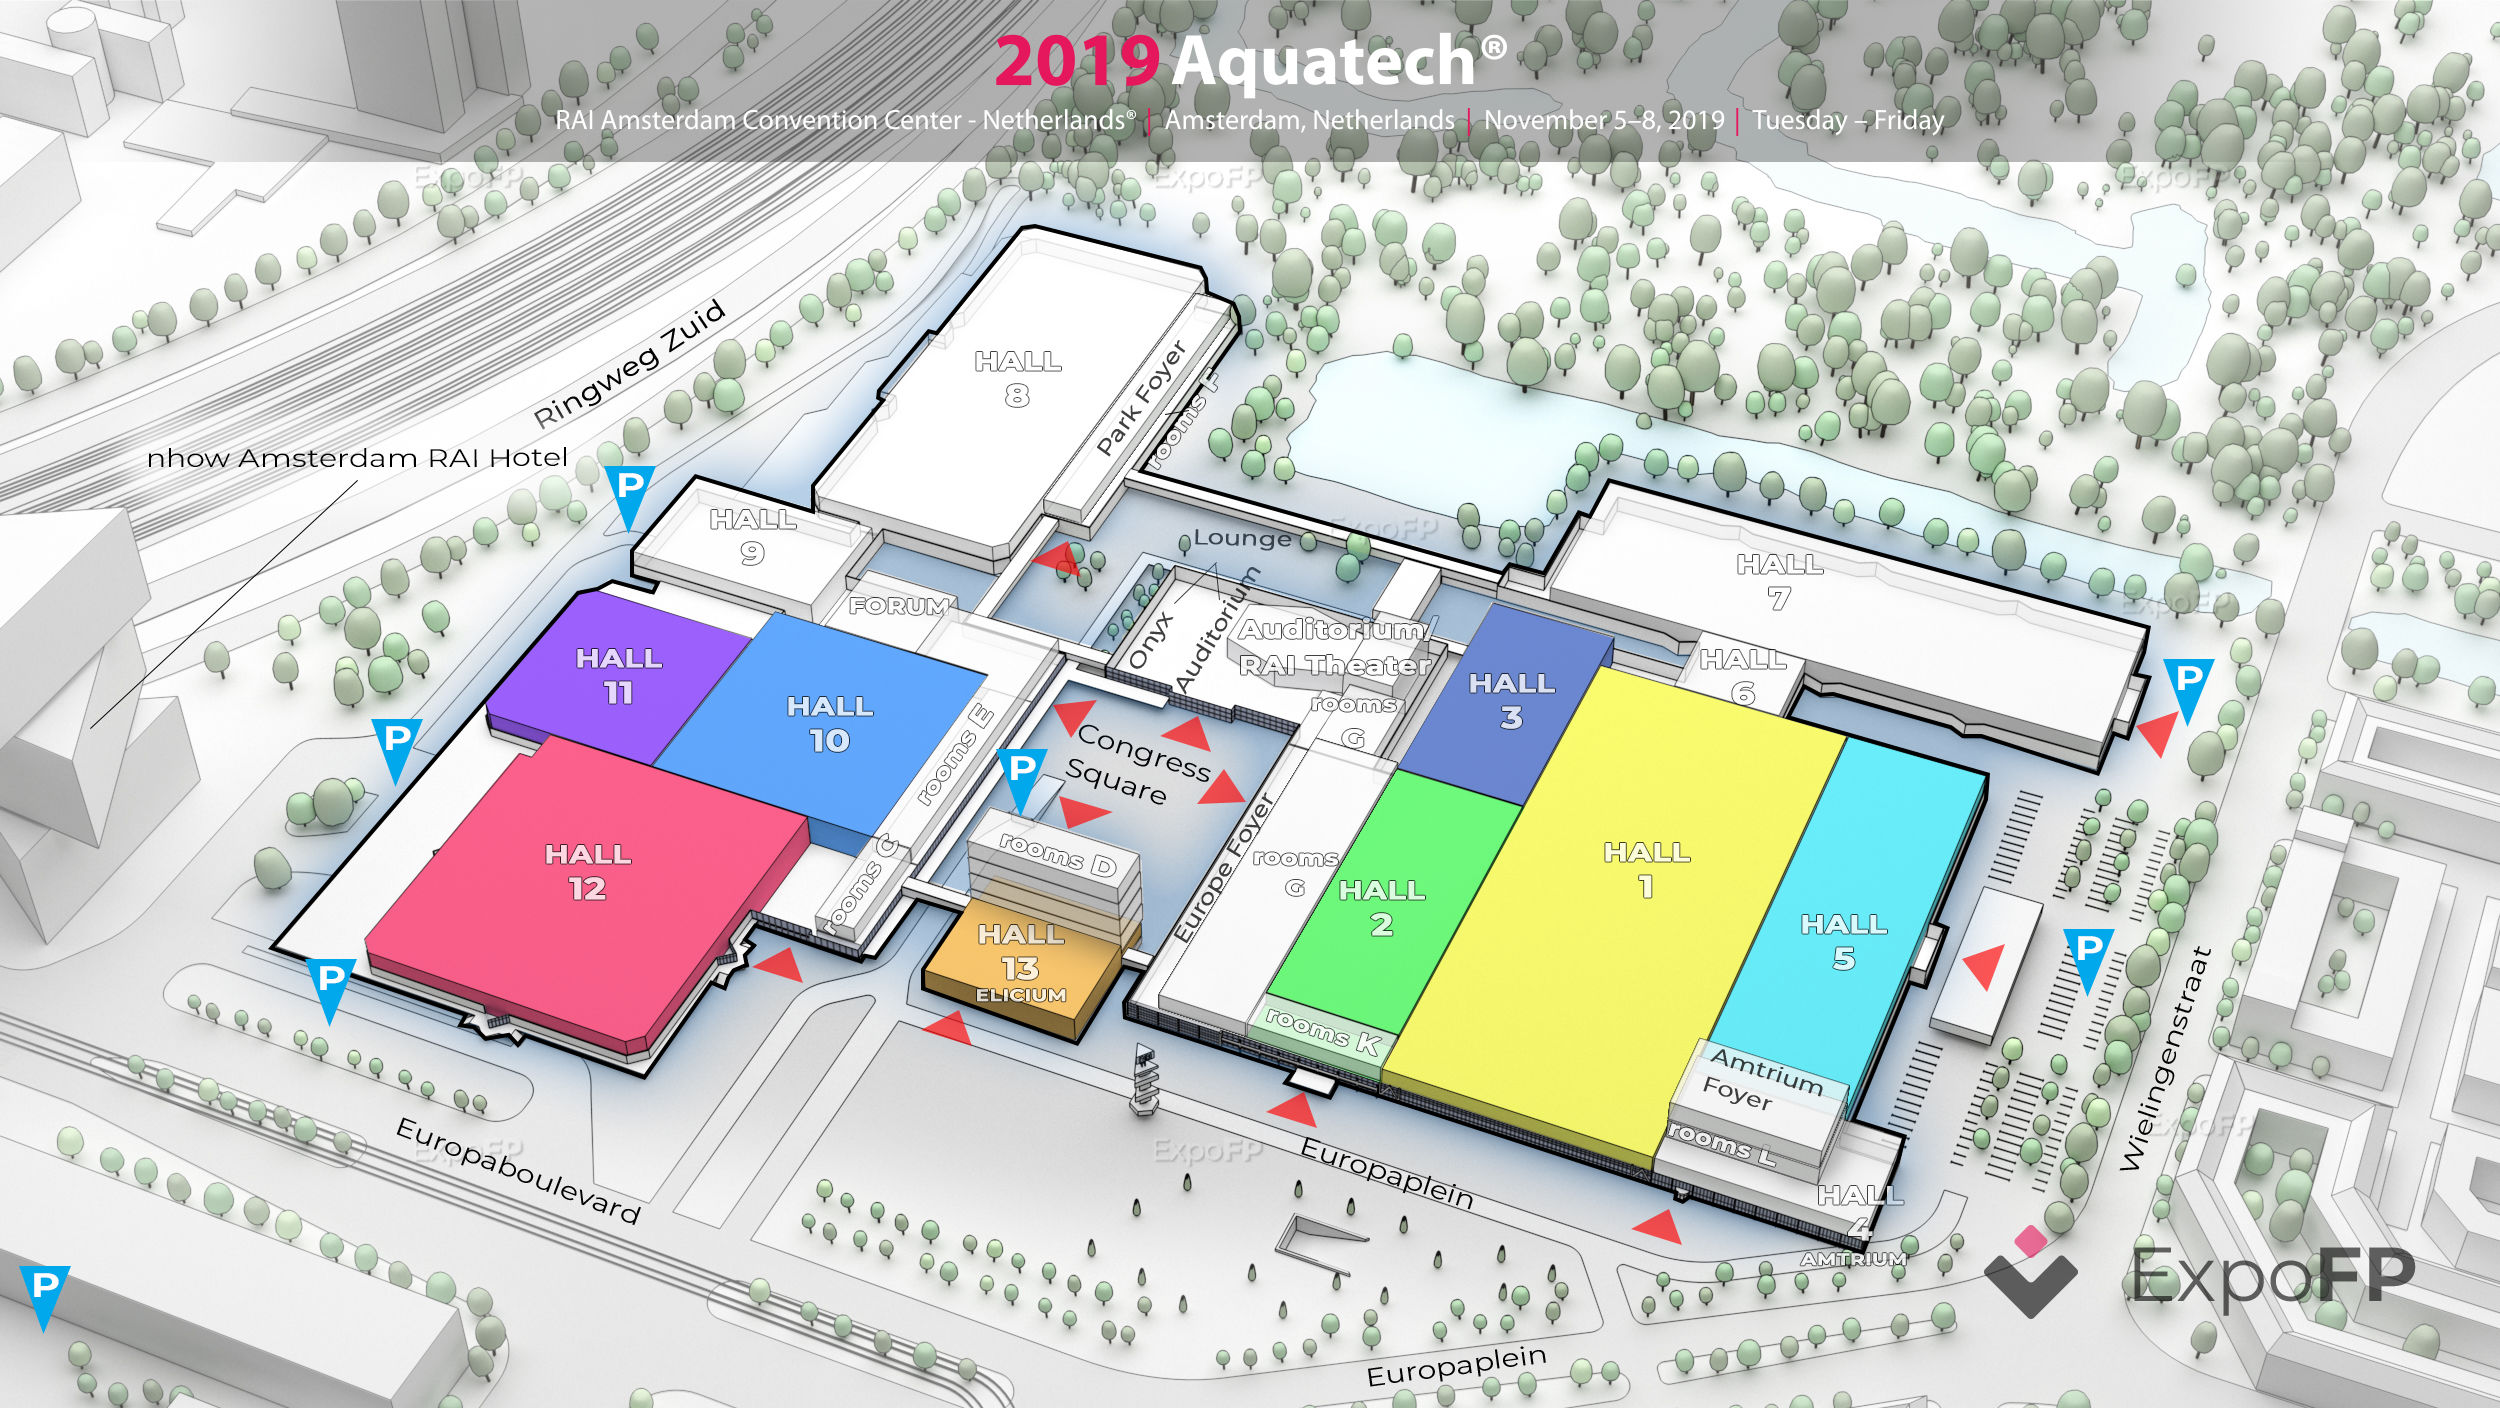 Aquatech 2019 in RAI Amsterdam Convention Center Netherlands